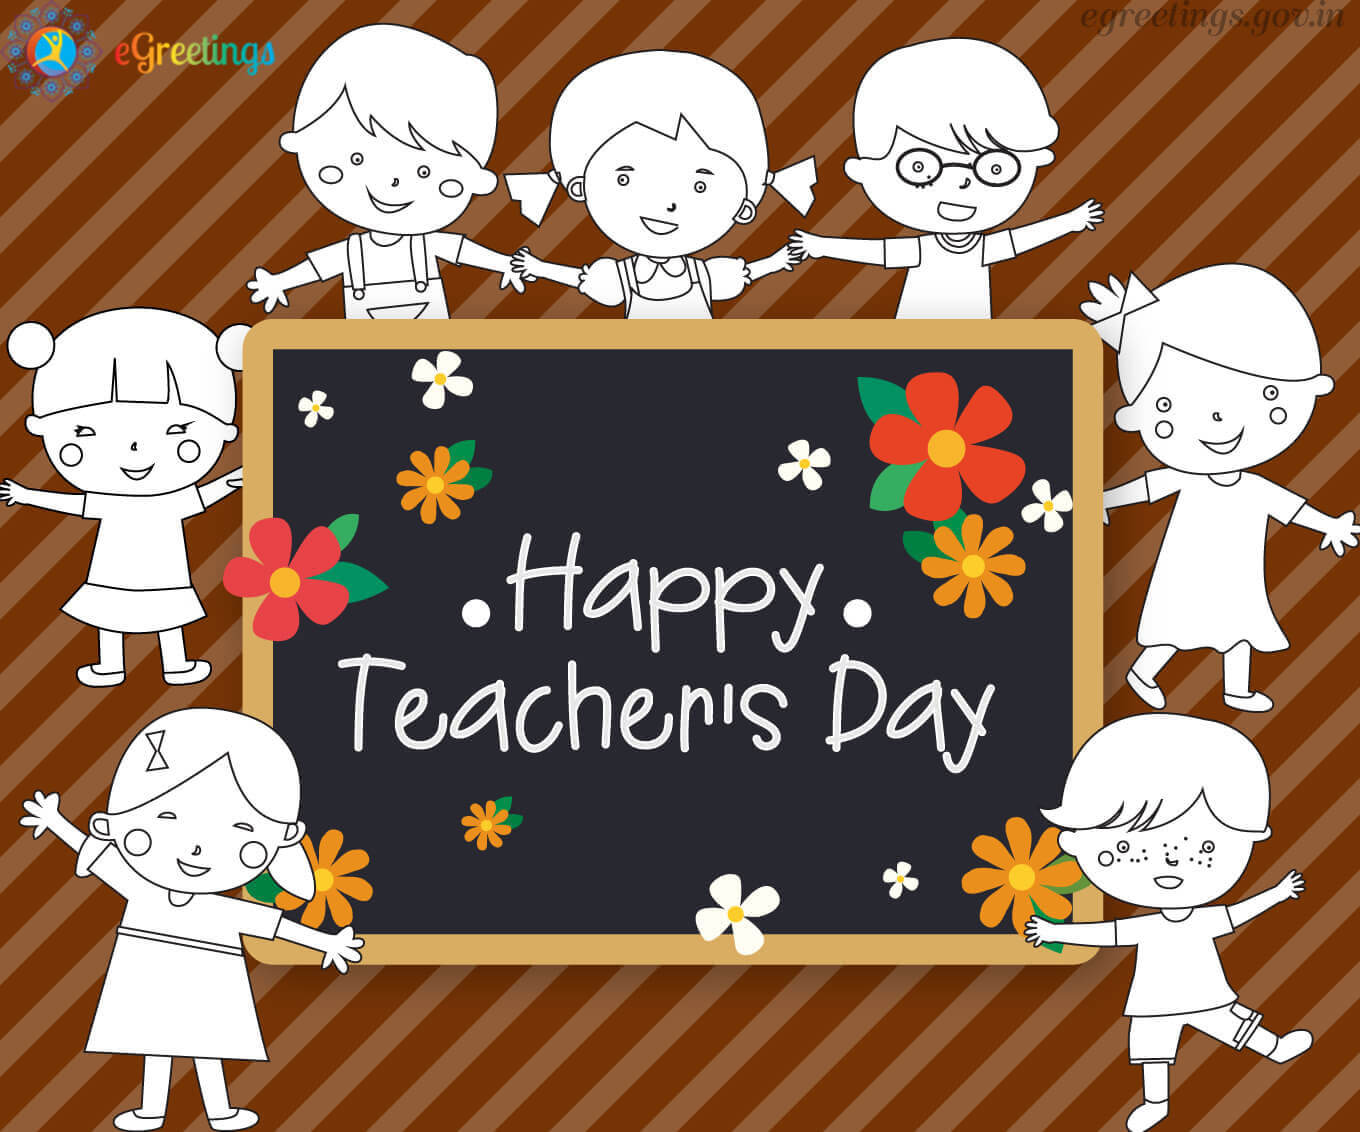 Teachers Day 2016 | eGreetings Portal